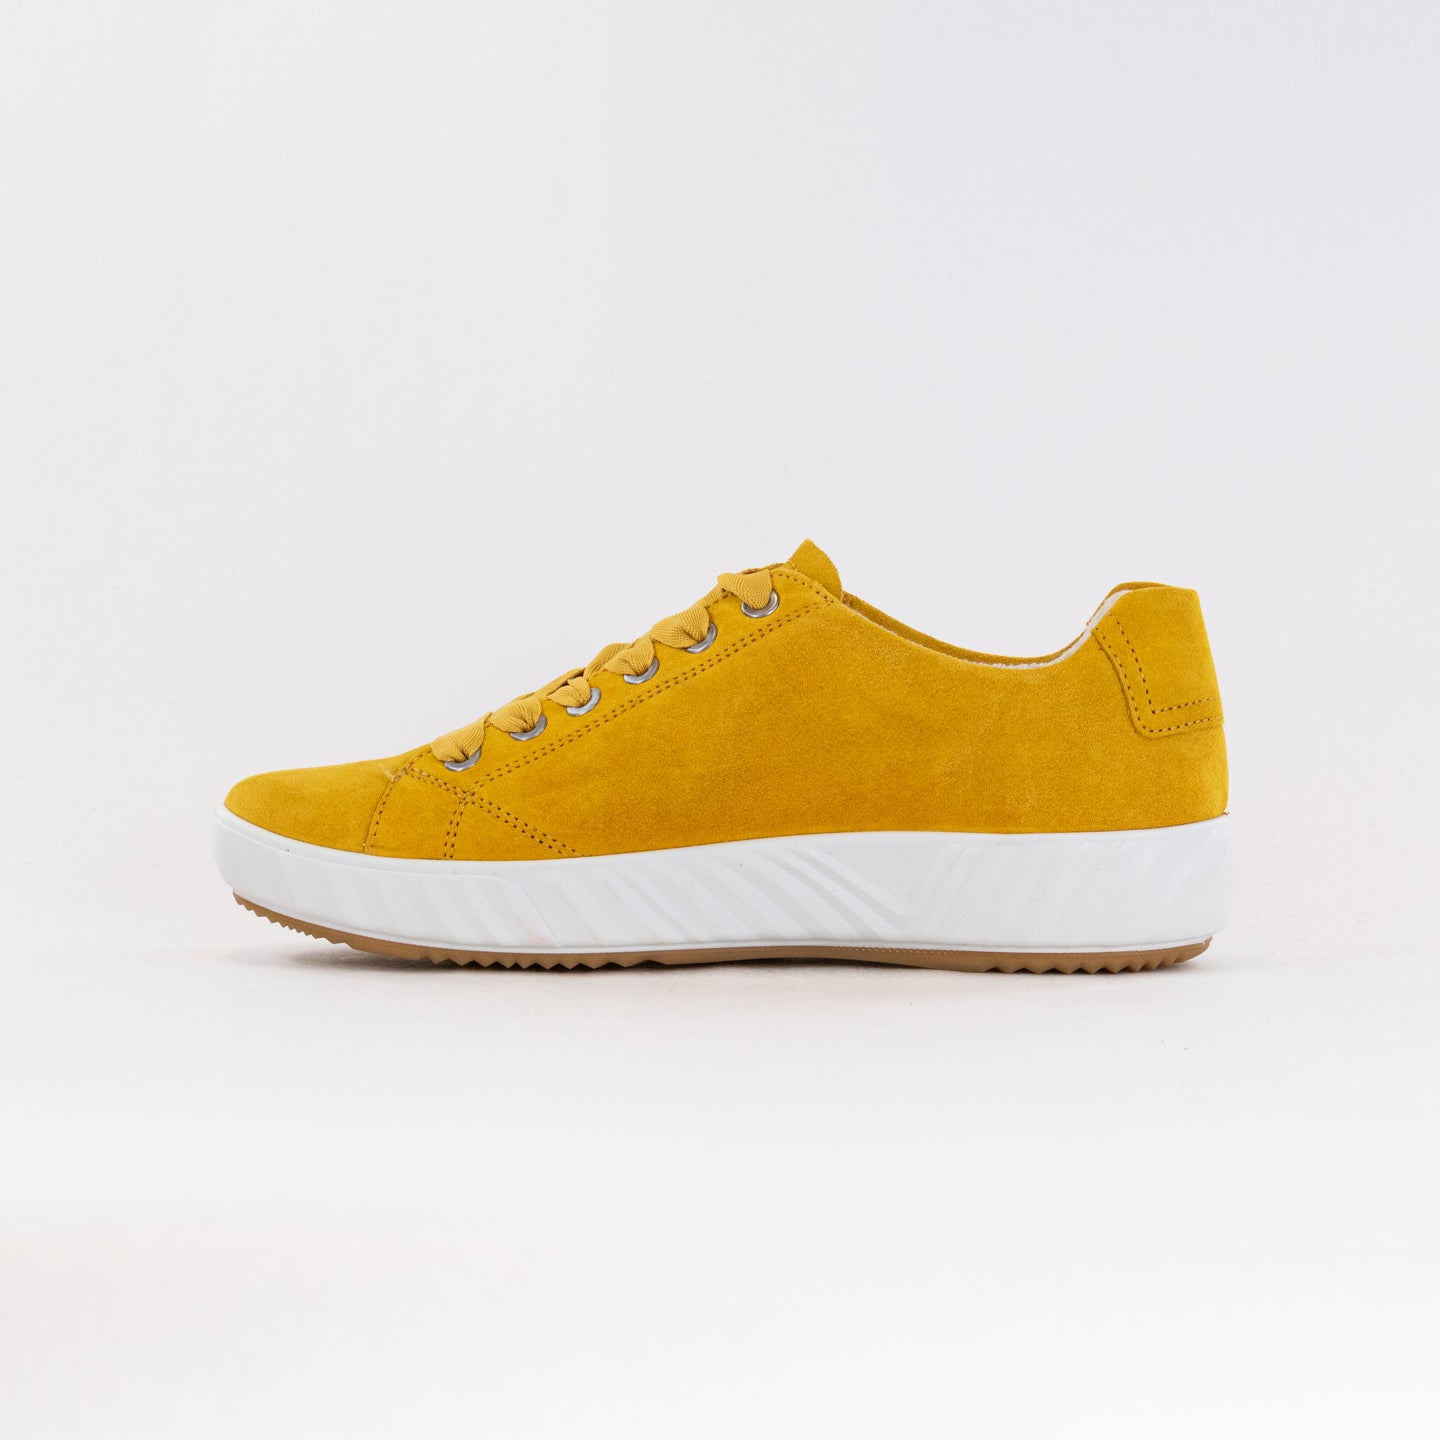 Ara Alexandria Lace Up Sneaker (Women's) - Yellow Suede